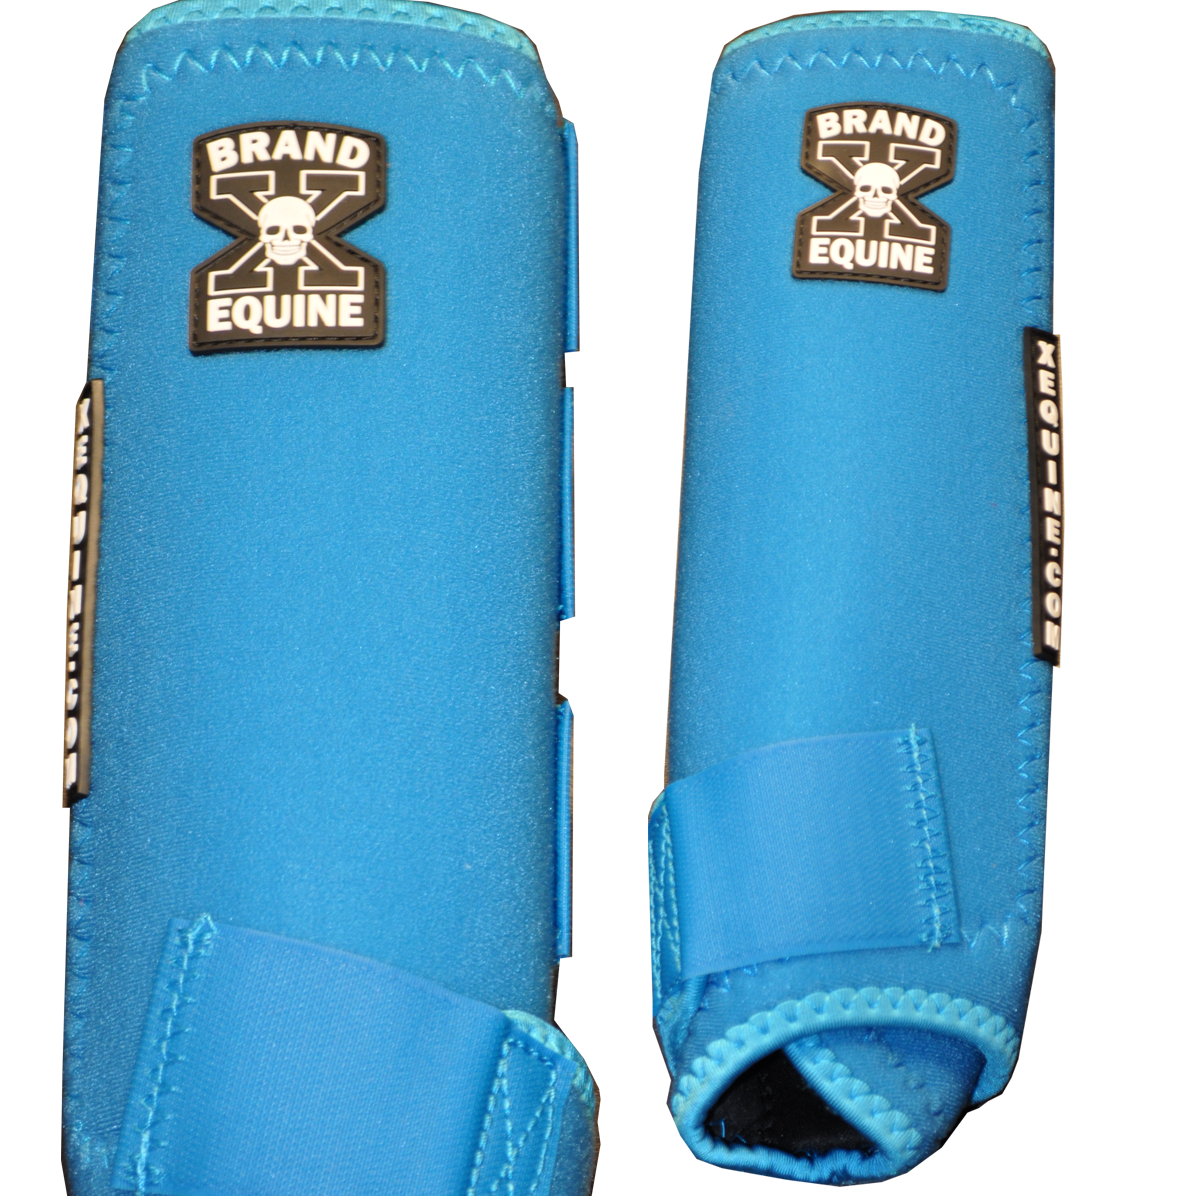 Premium Hind Sport Boots - Turquoise